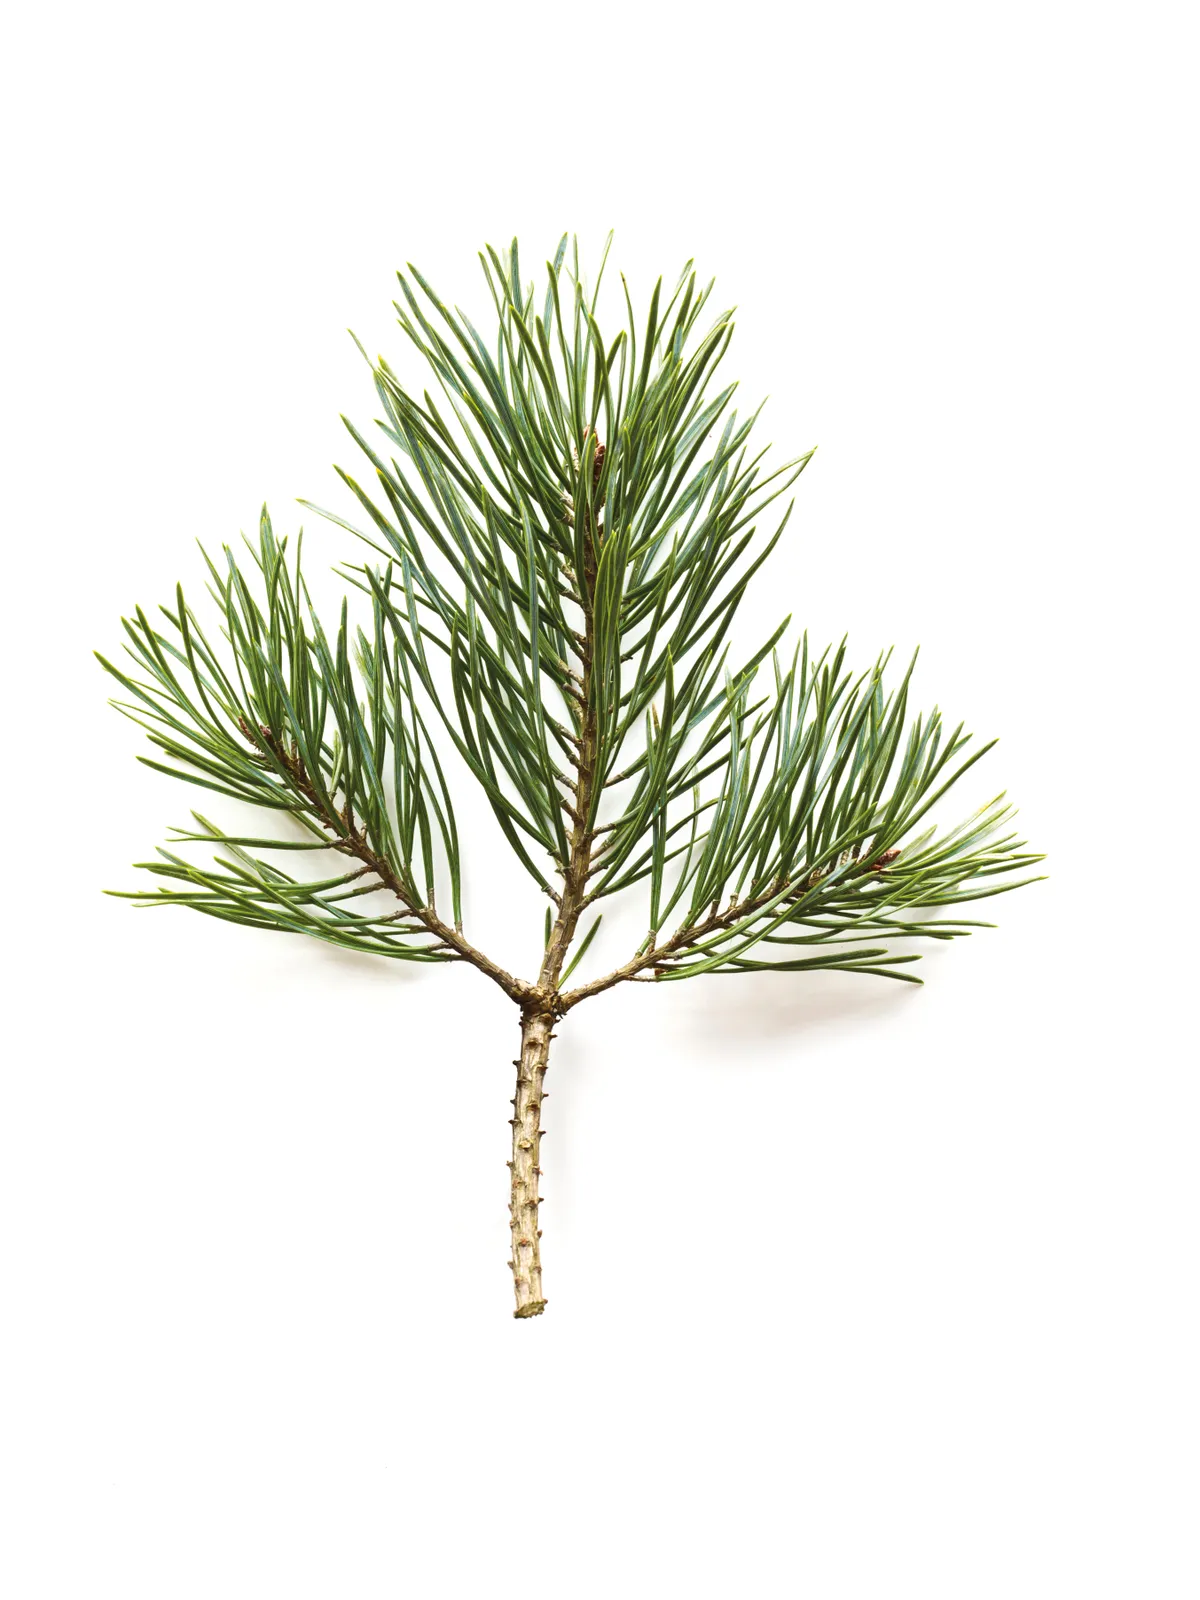 Pinus Sylvestris (Scots Pine)